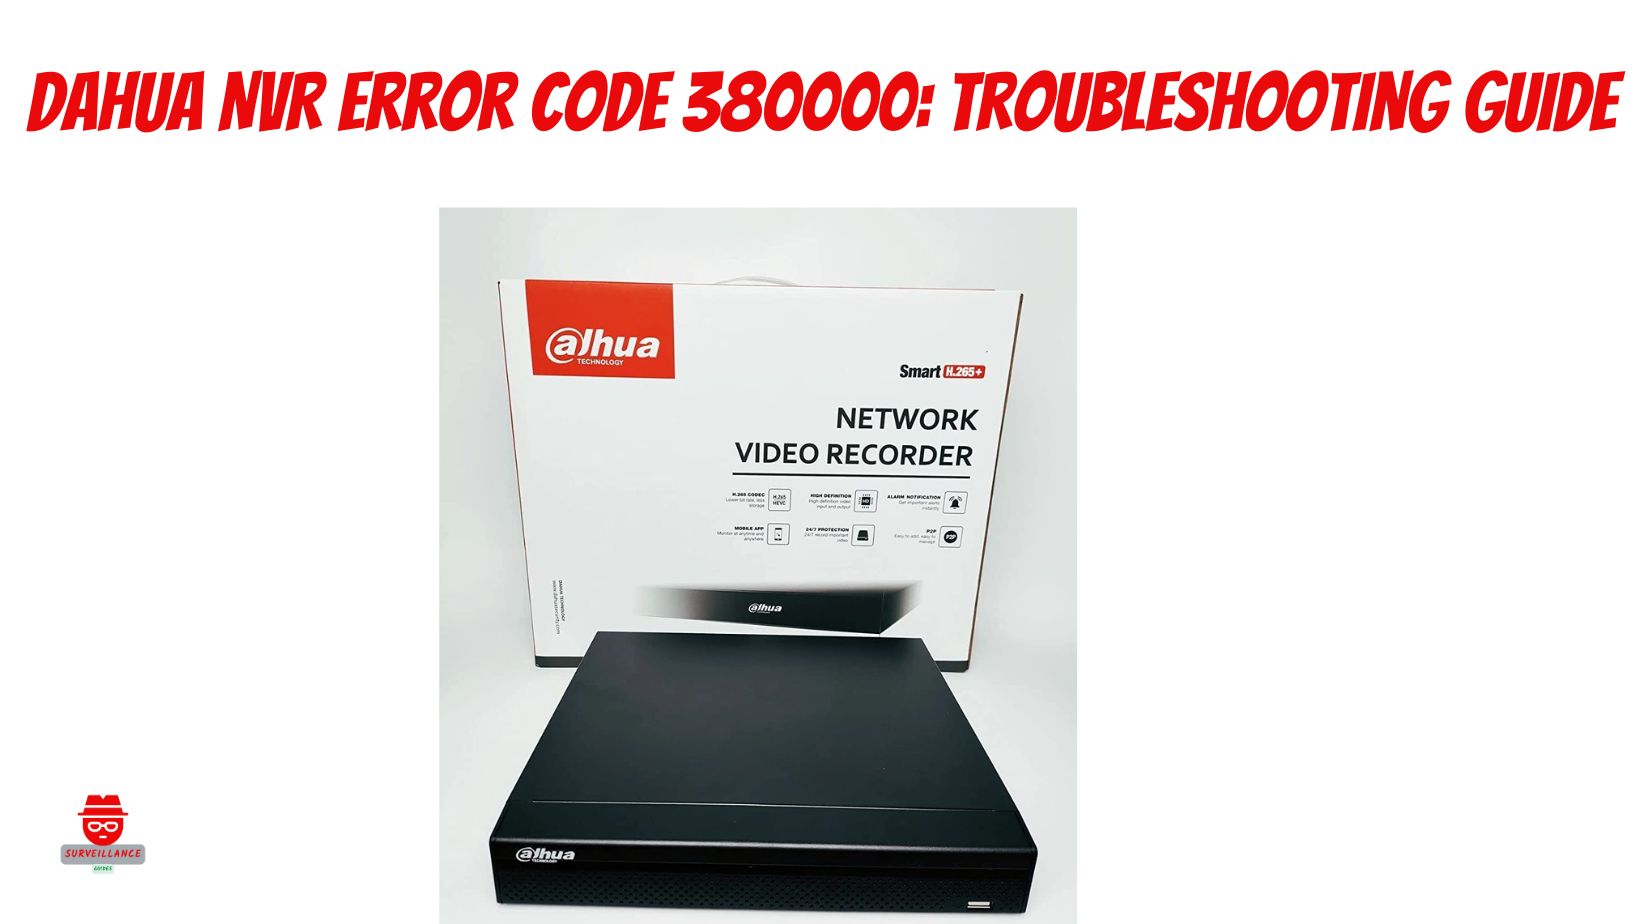 Dahua NVR error code 380000